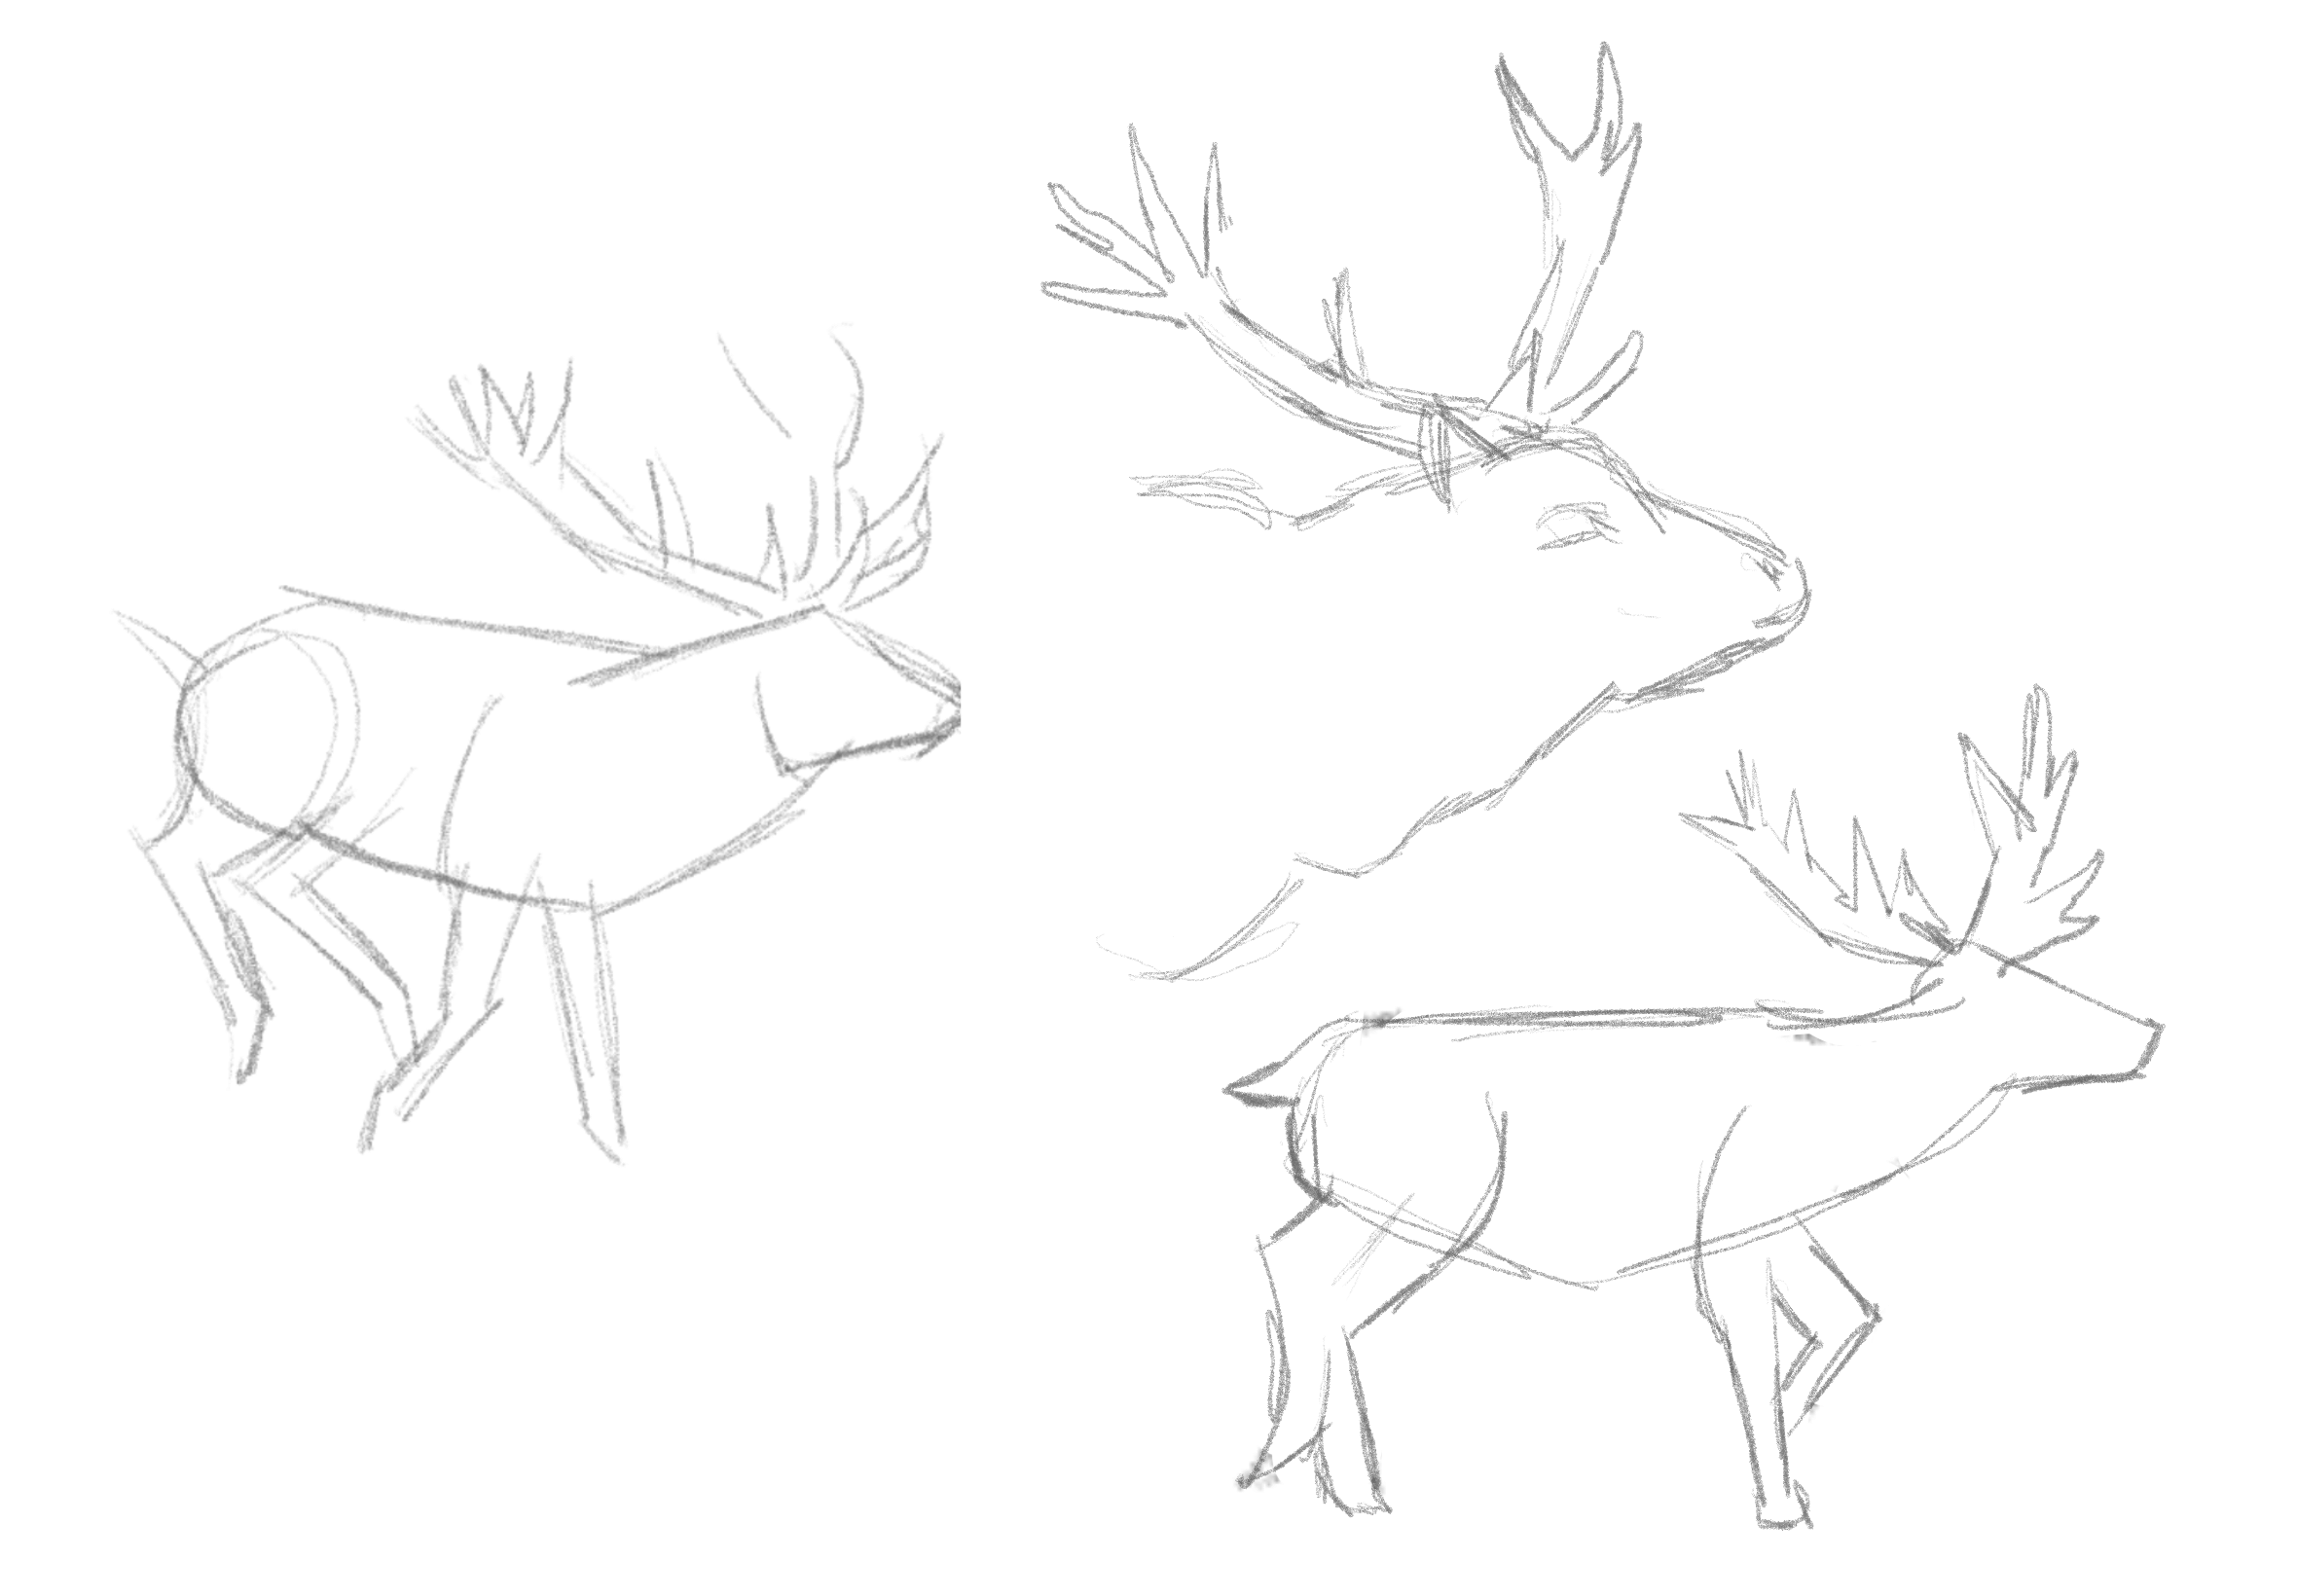 Sketches of a deer